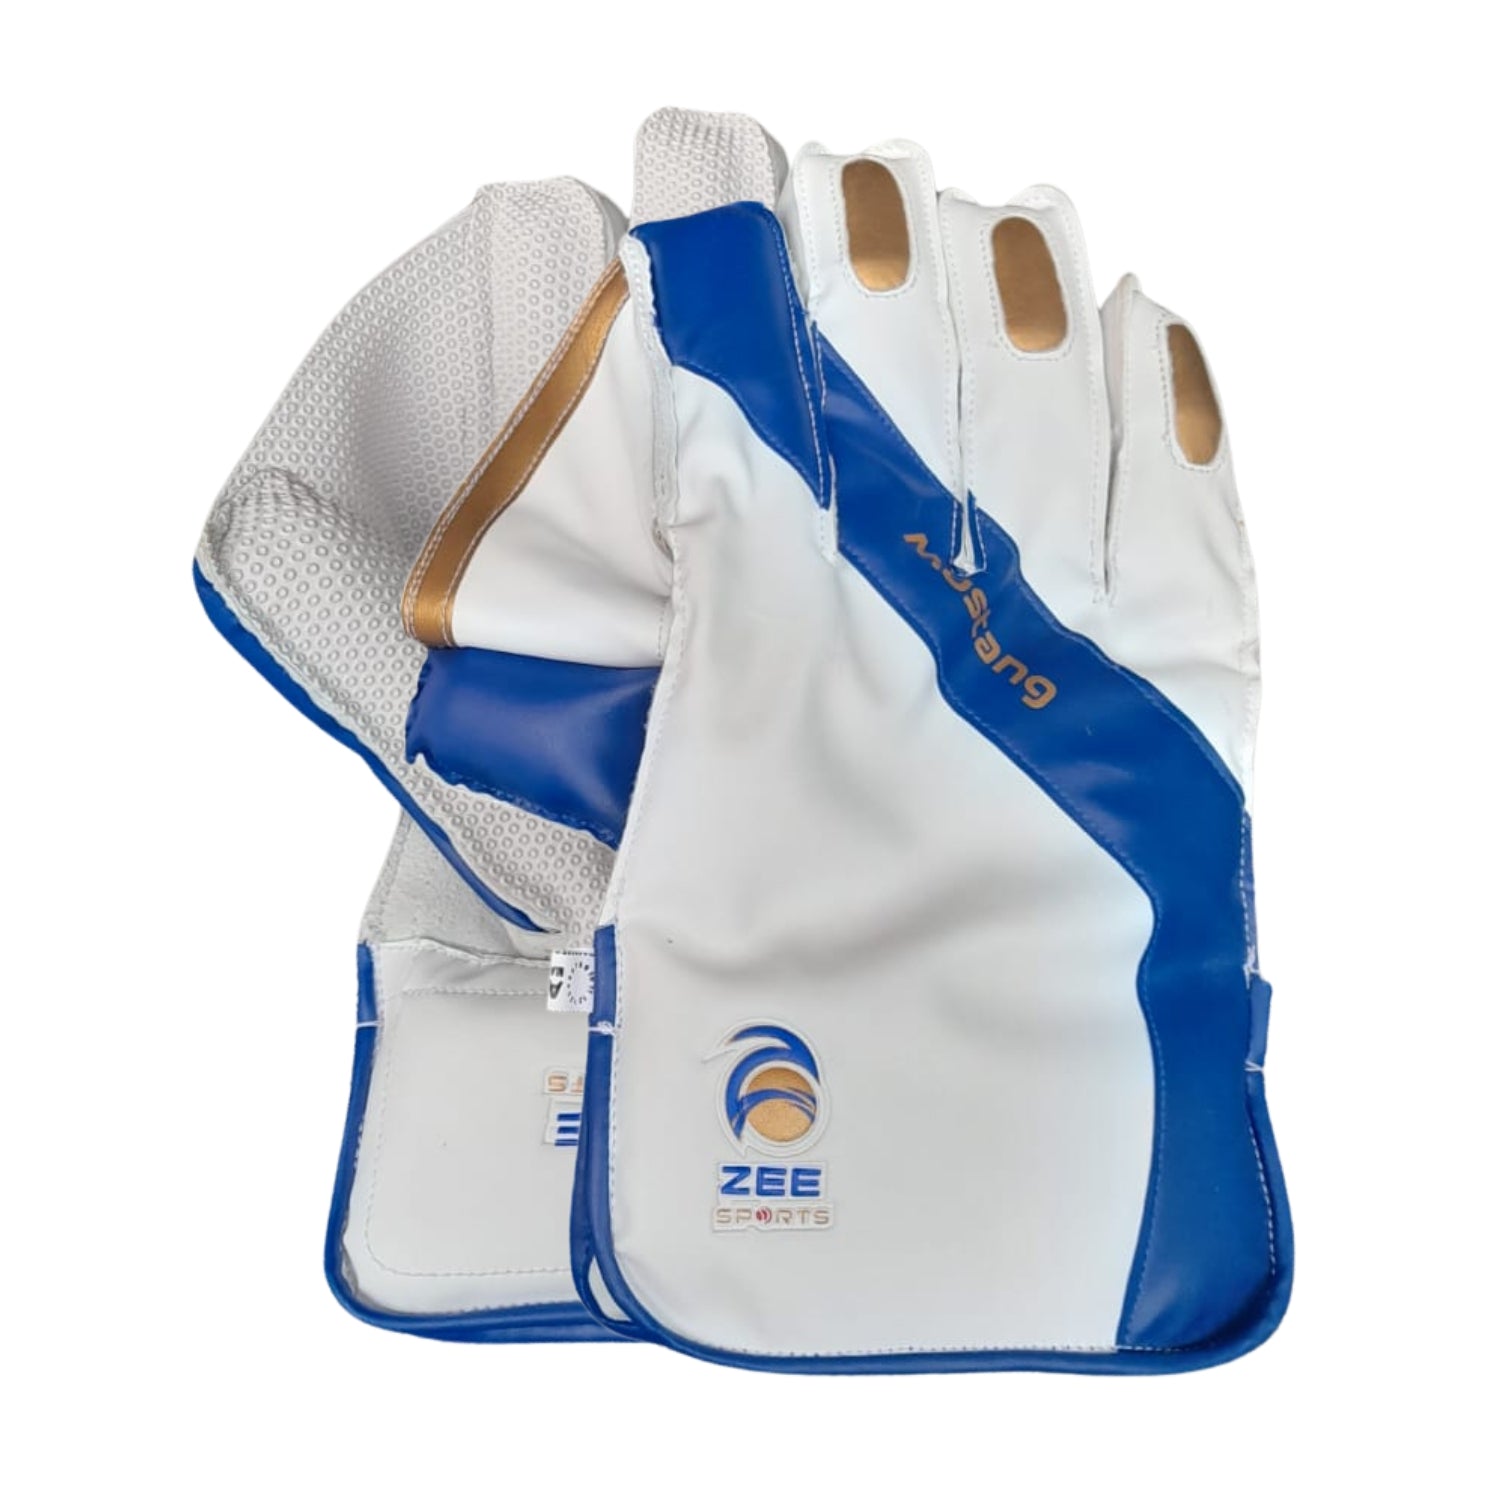 ZeeSports Wicket Keeping Gloves, Model Mustang 3-Star, Adult